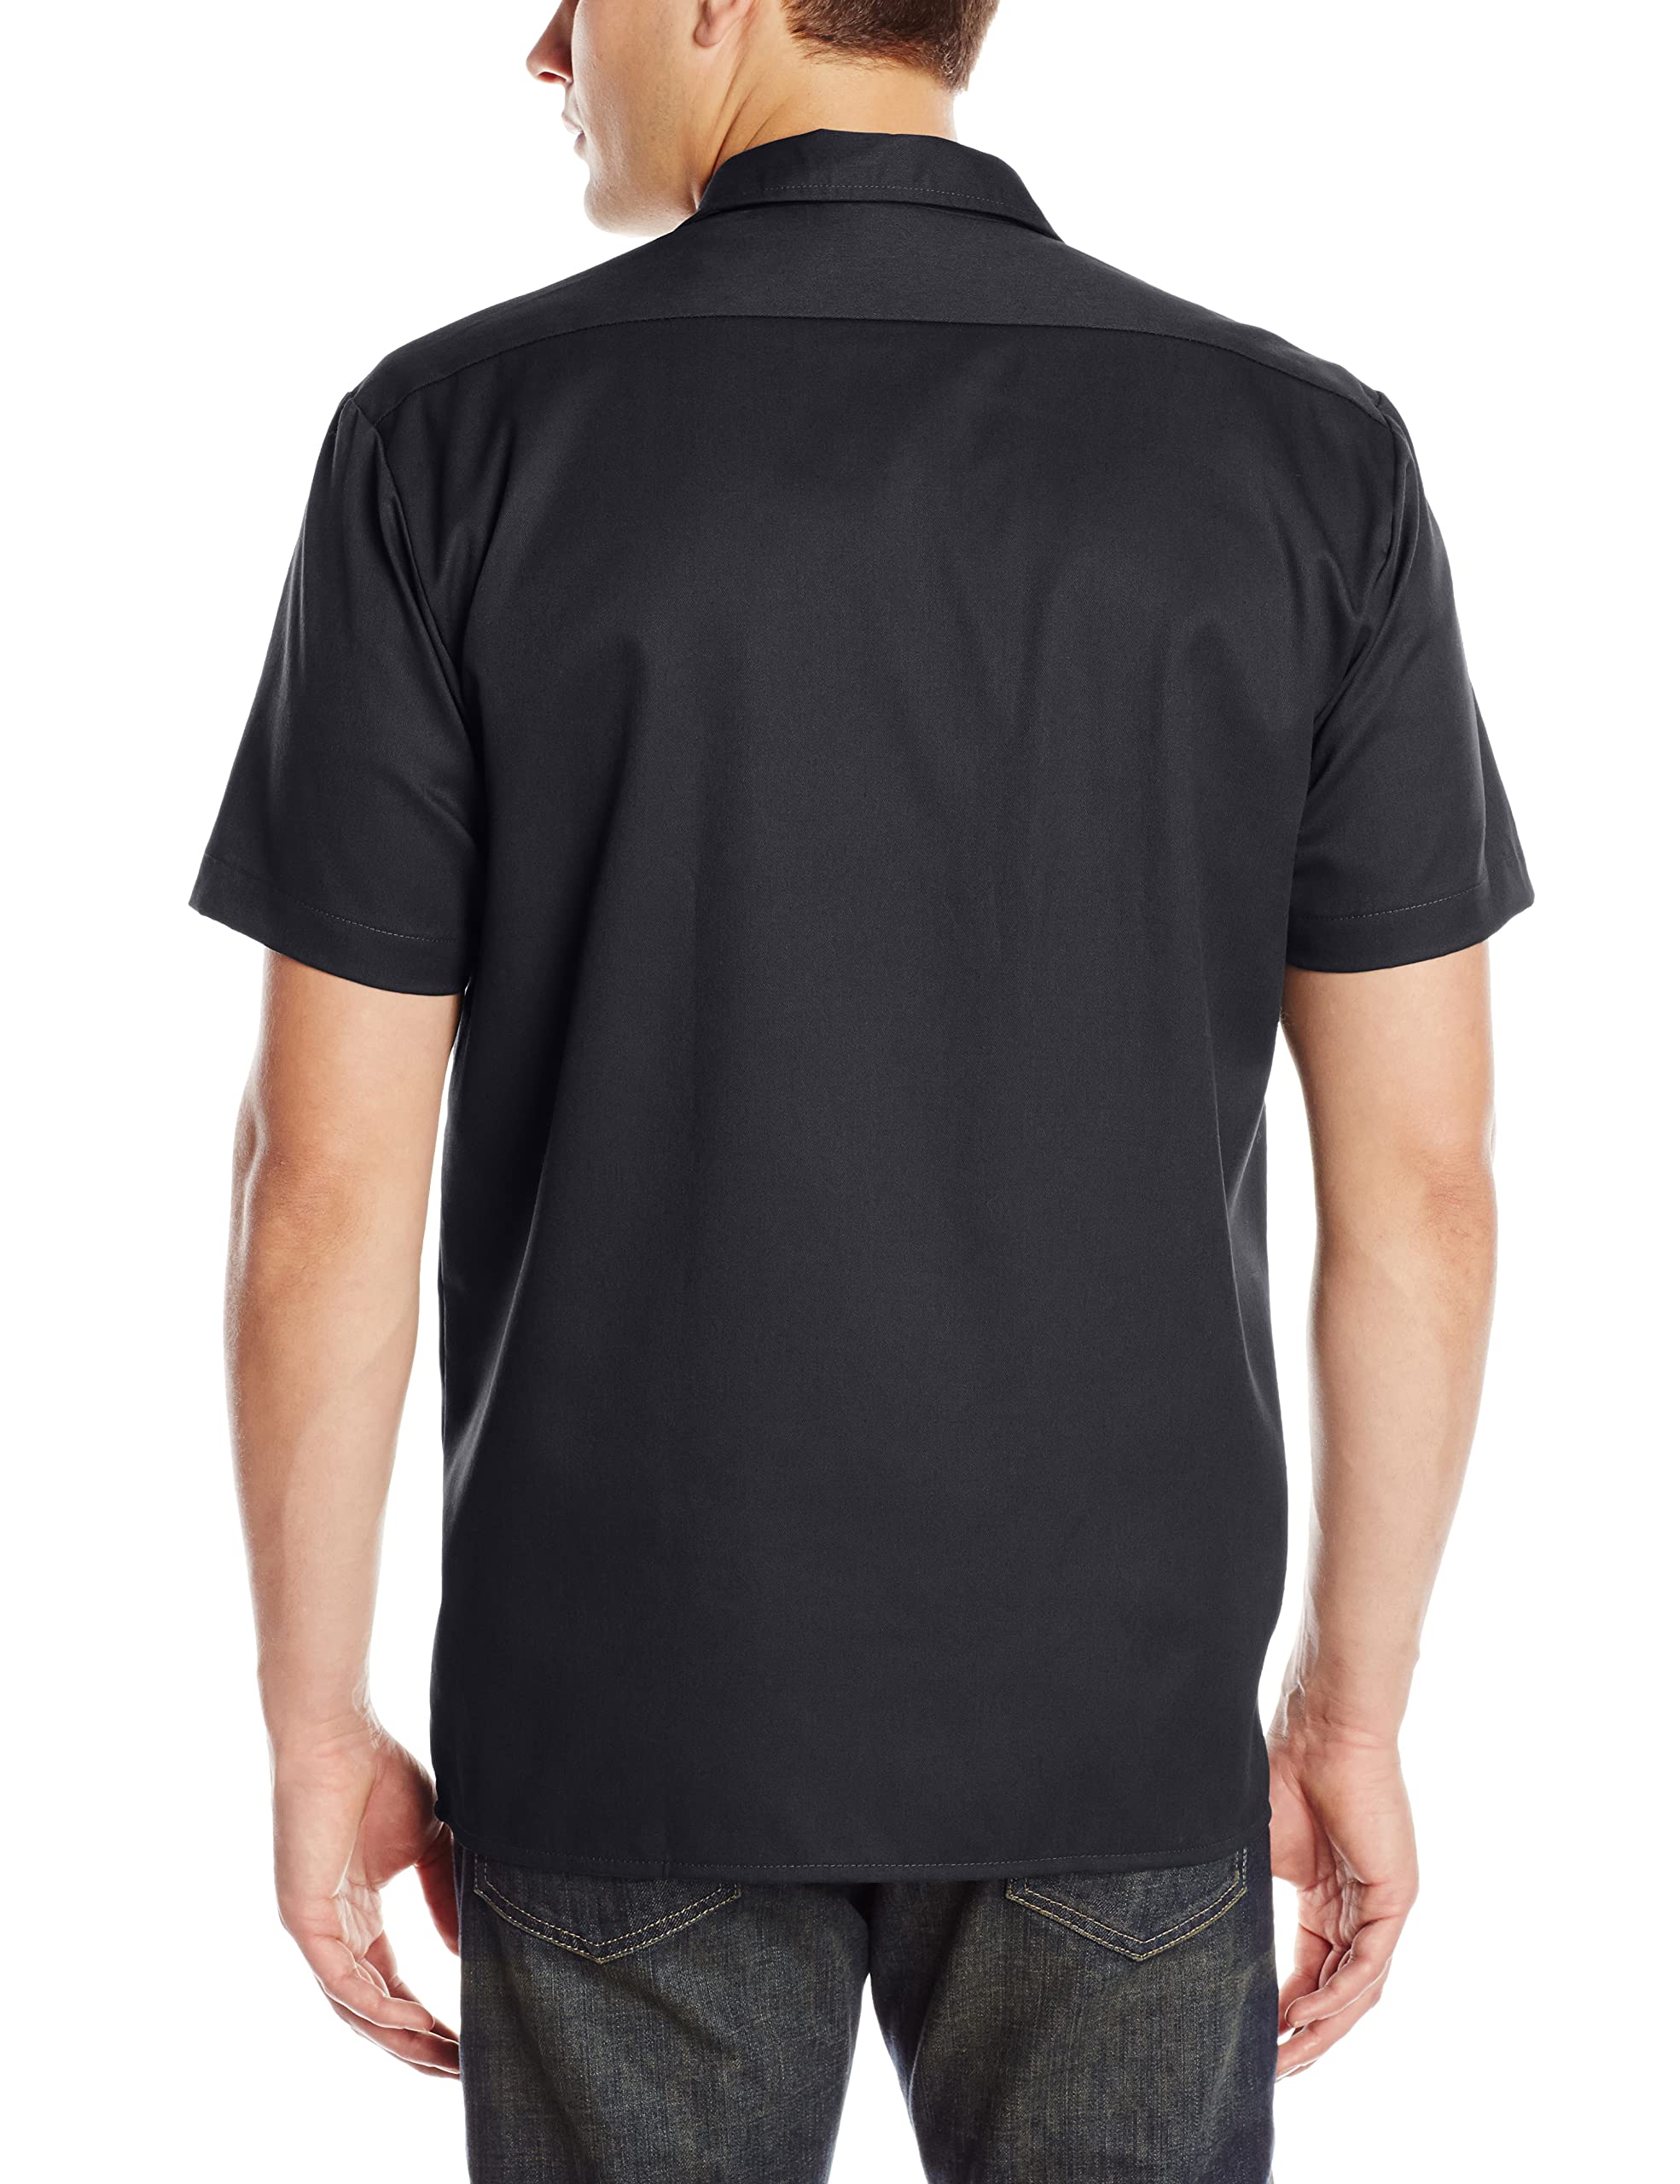 Dickies Men's Short-Sleeve Work Shirt